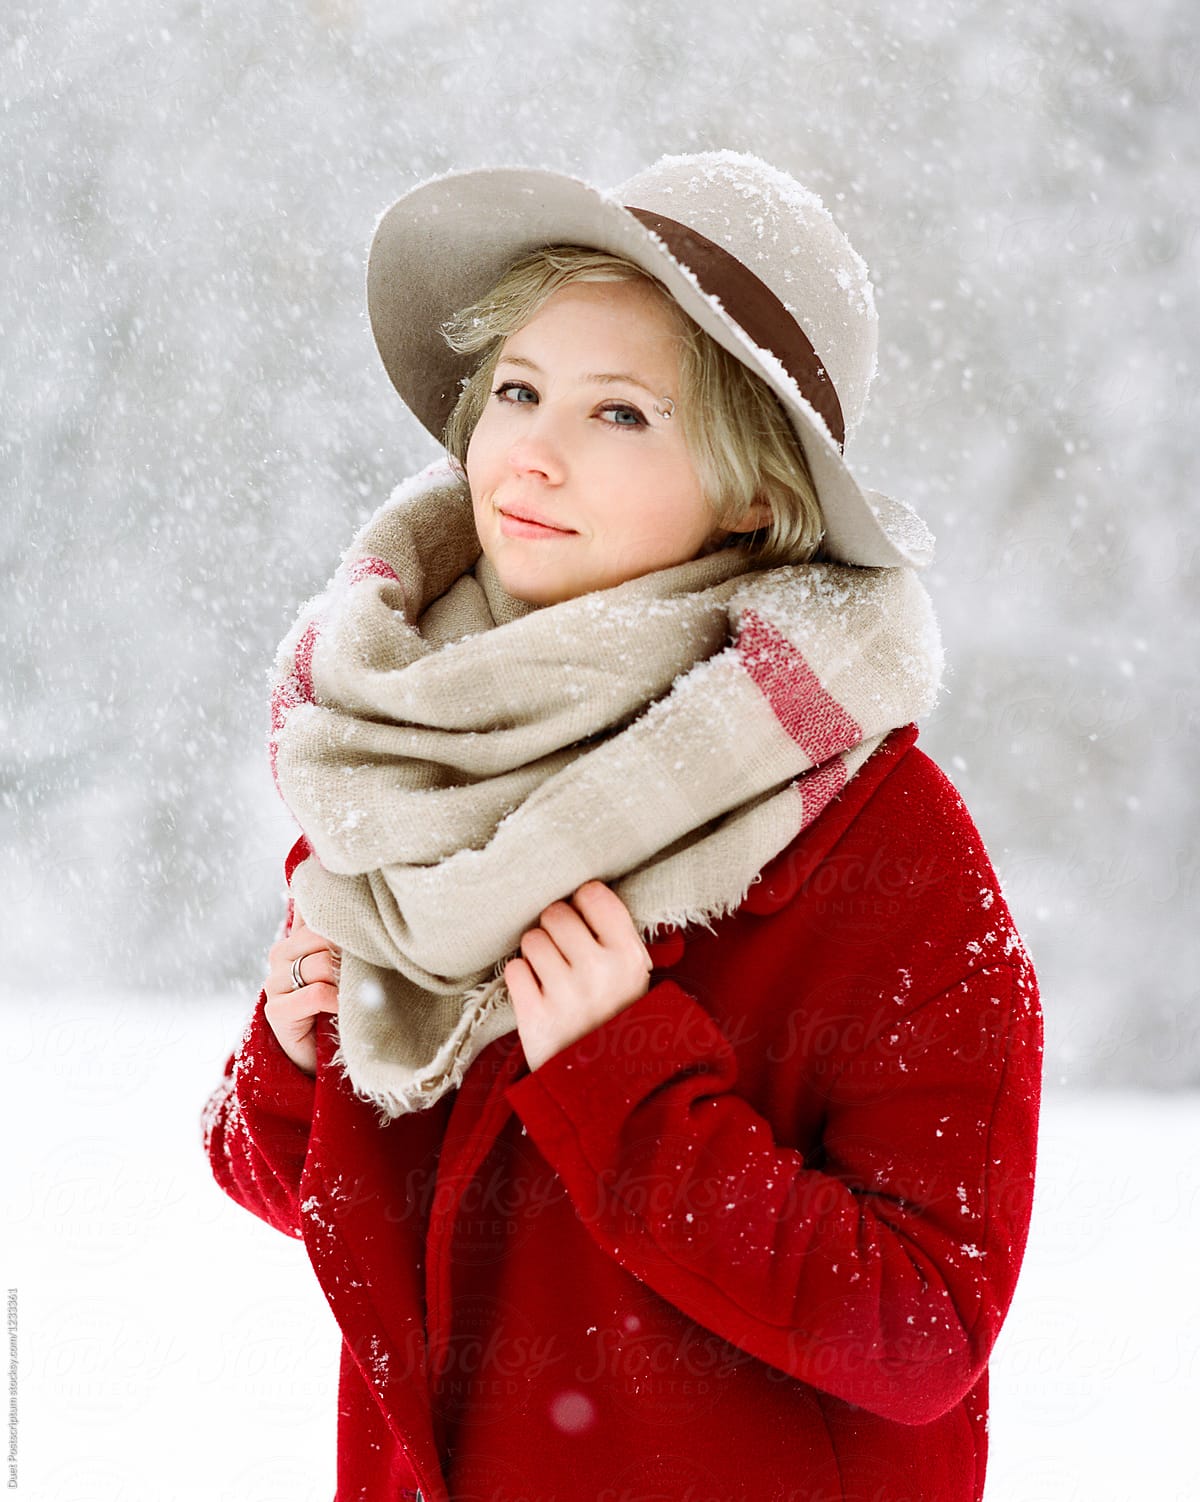 Young Girl In Red Coat Posing By Stocksy Contributor Duet Postscriptum Stocksy 8984